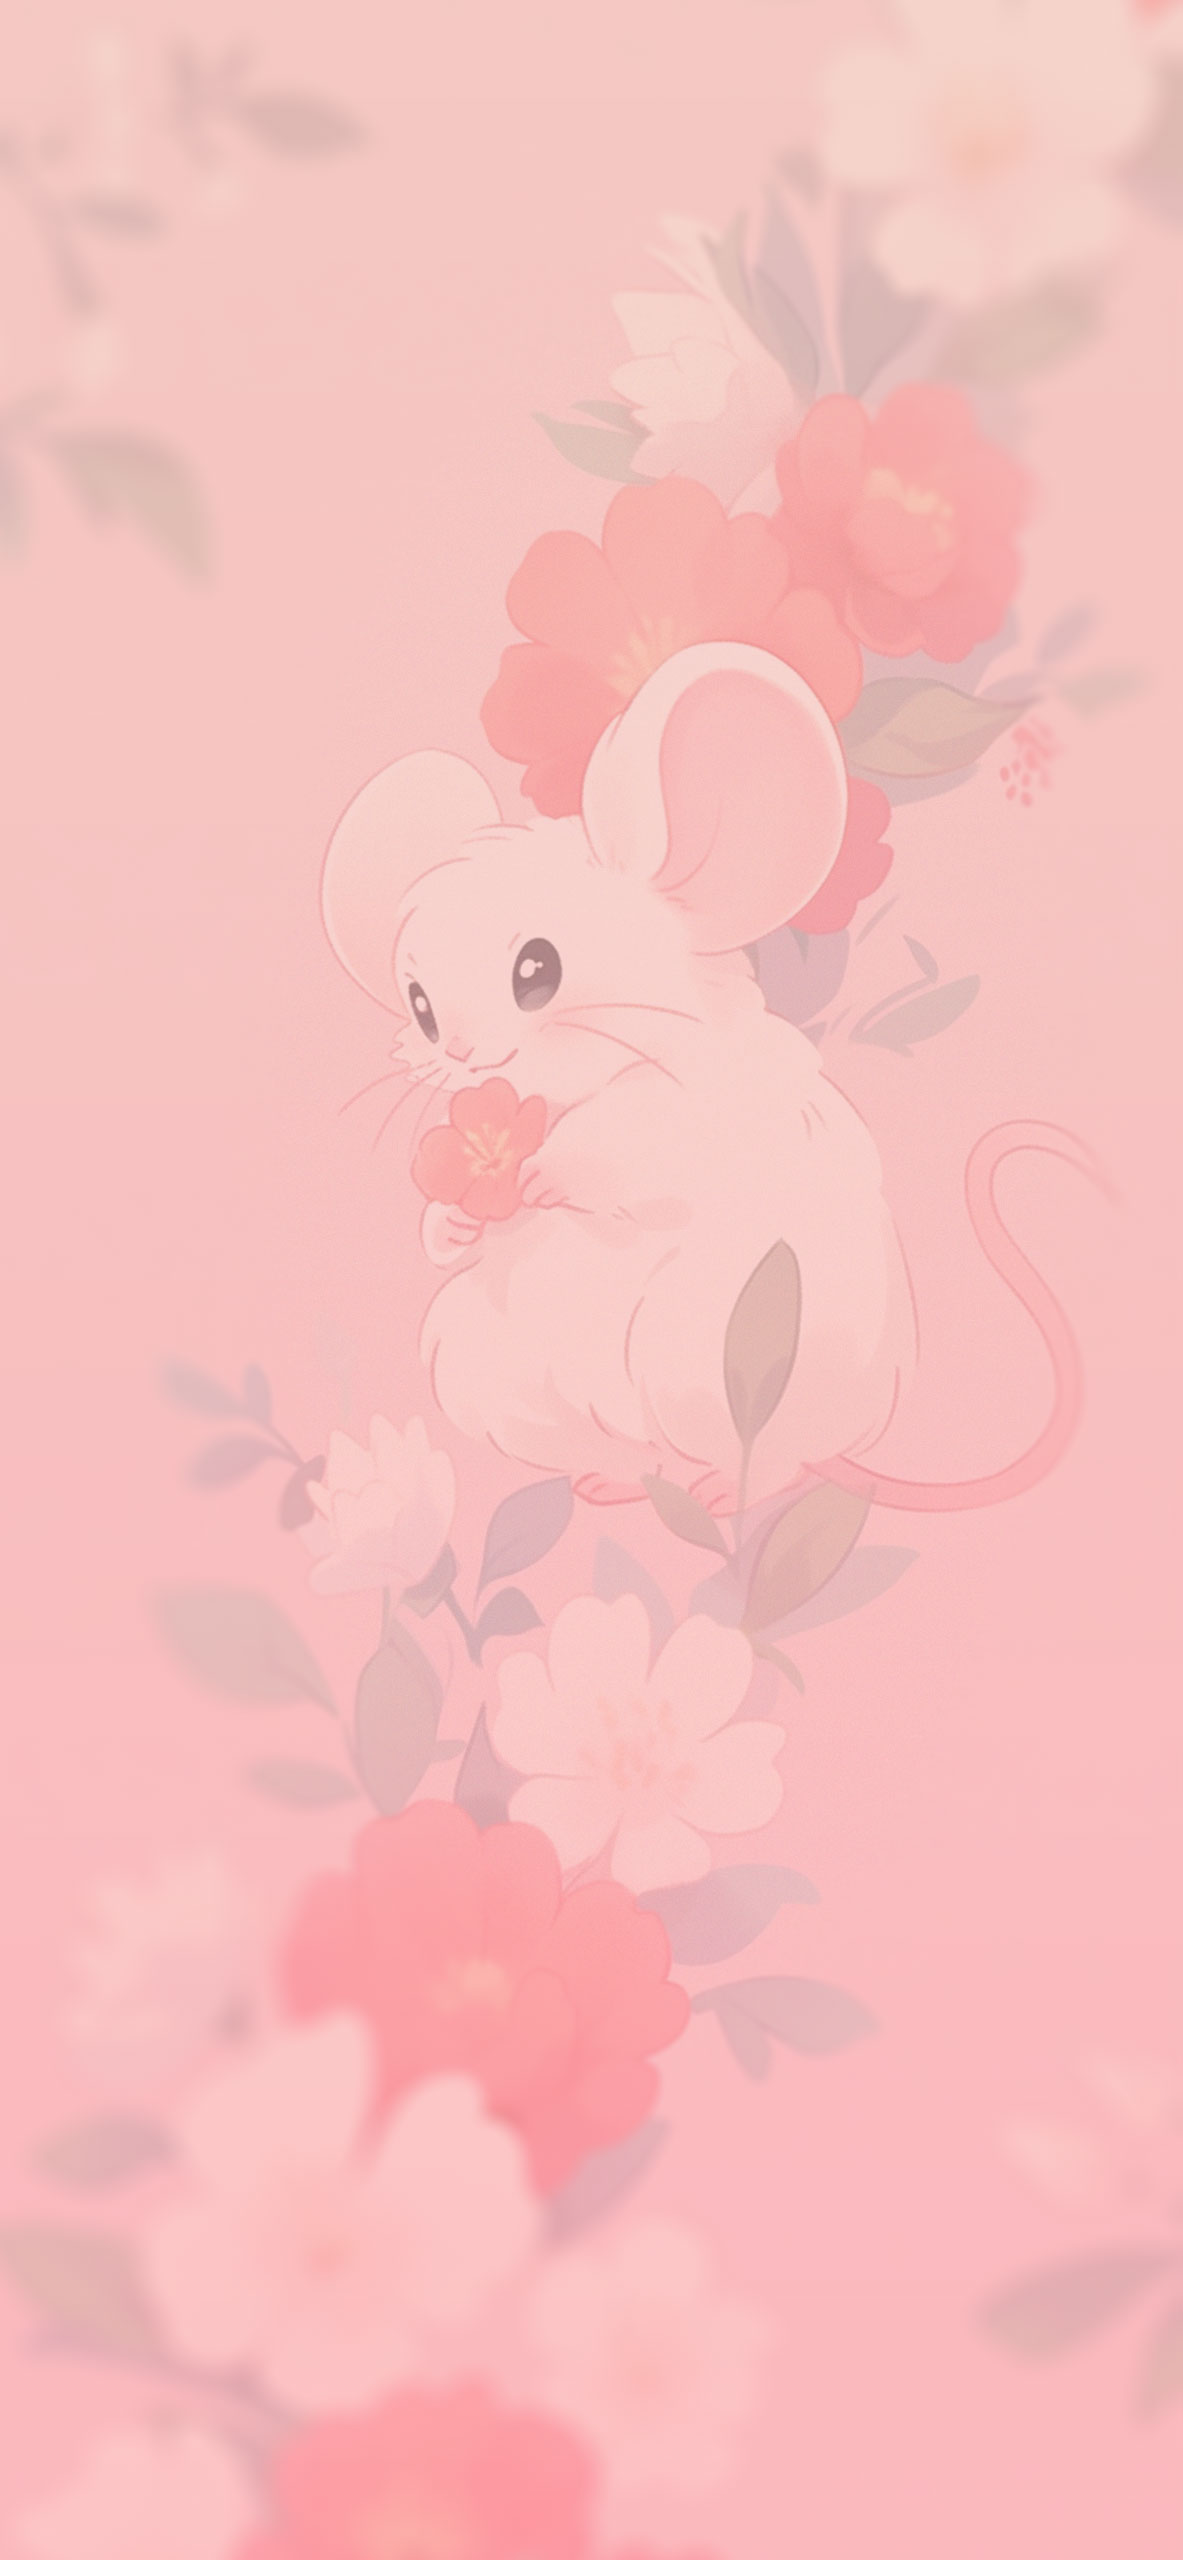 Cute mouse & flowers pink wallpaper Kawaii pink aesthetic wall